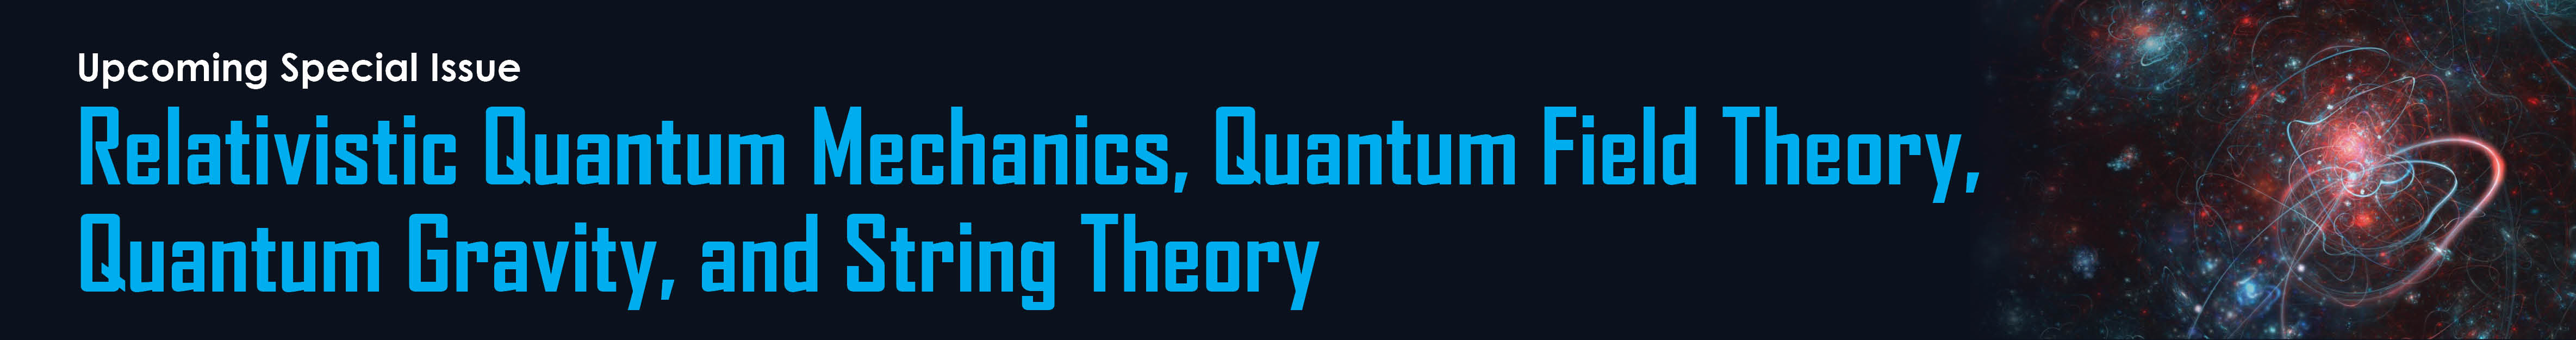 Relativistic Quantum Mechanics, Quantum Field Theory, Quantum Gravity, and String Theory.jpg